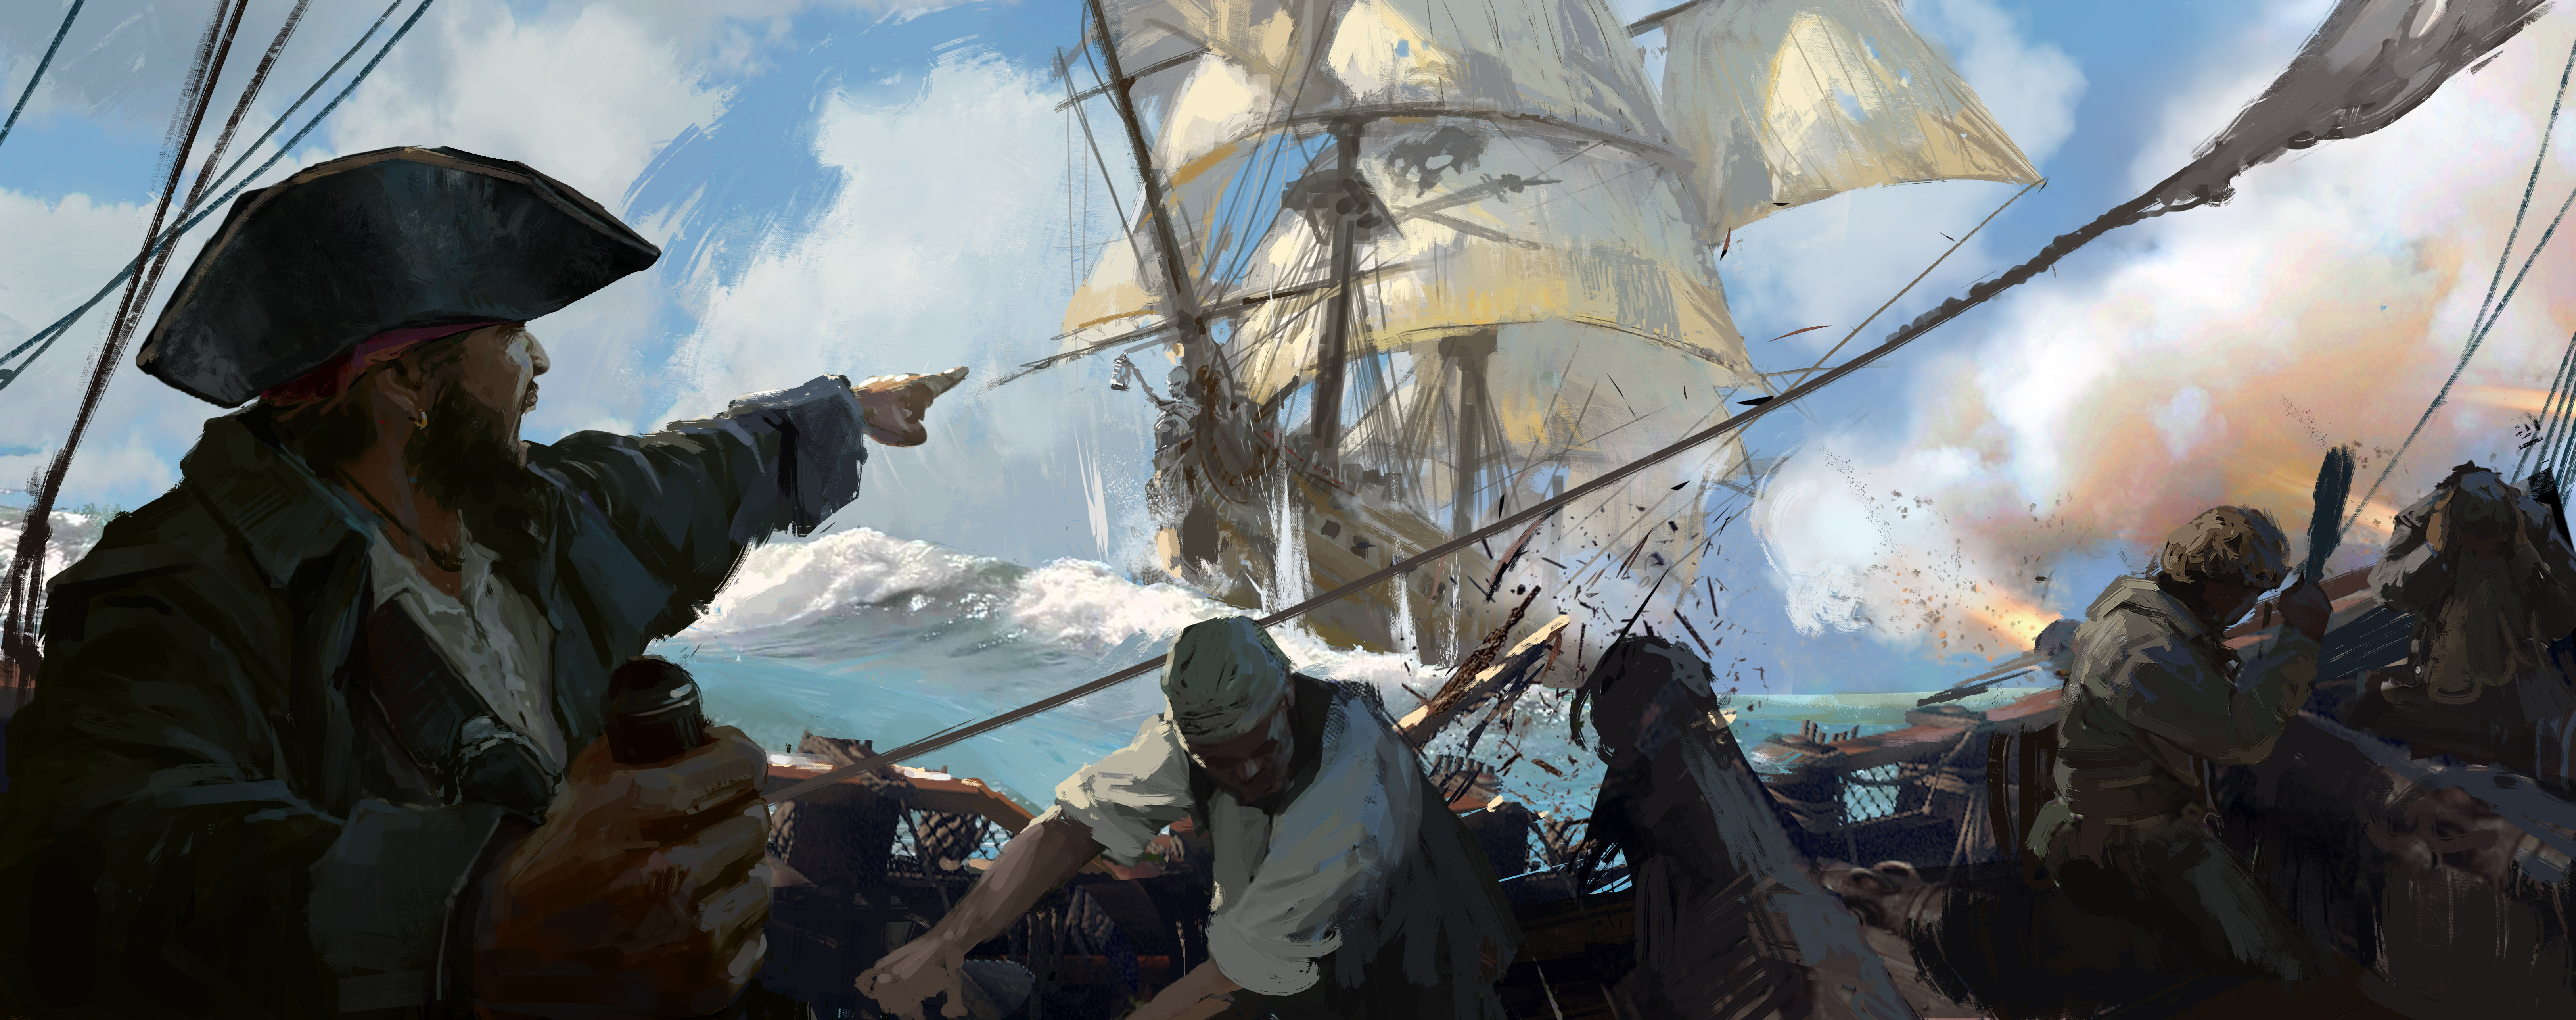 video game, skull and bones, pirate ship, pirate